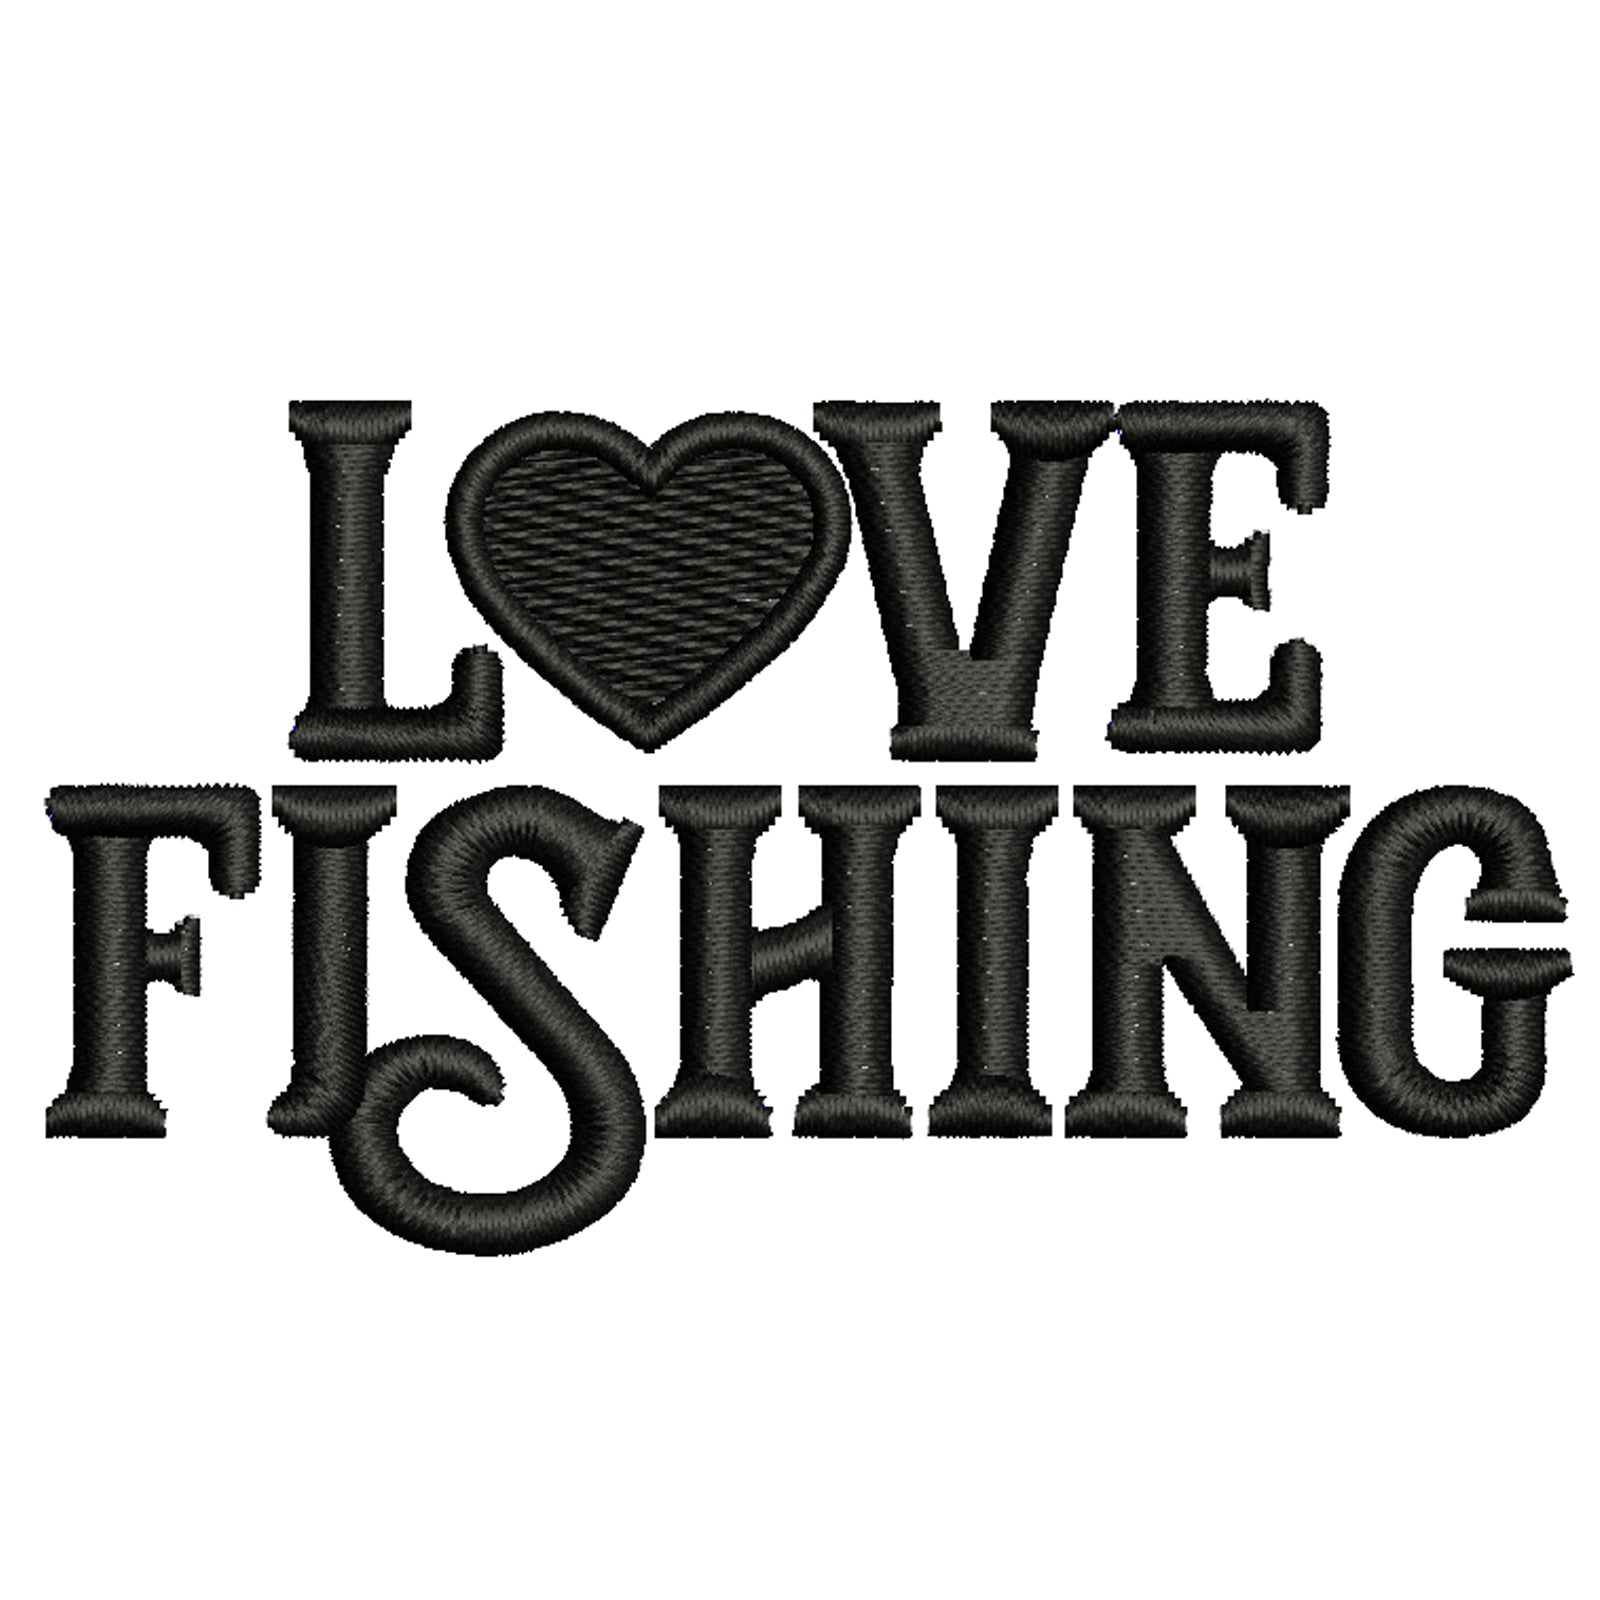 Heart Fishing, Athletics Digitized Embroidery Design